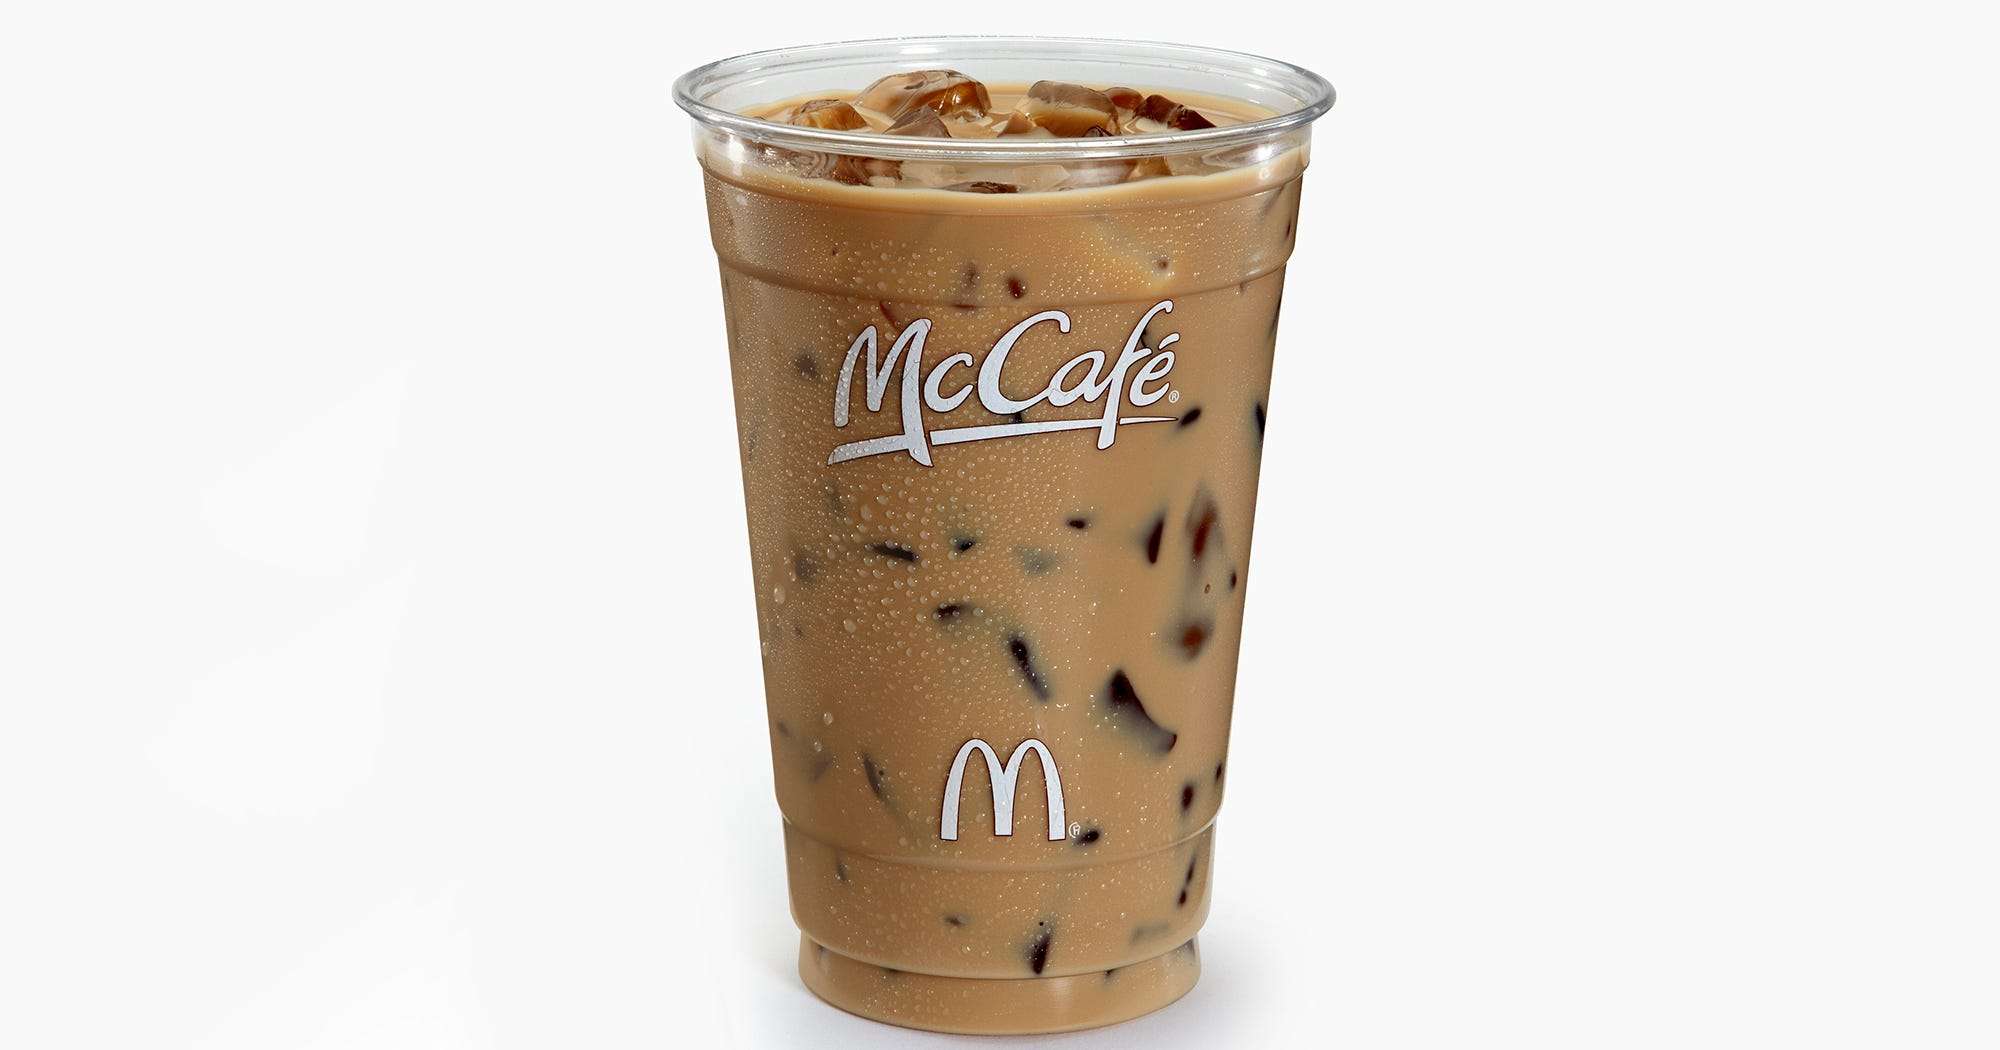 McDonalds McCafe Secret Menu Drink Shamrock Iced Coffee